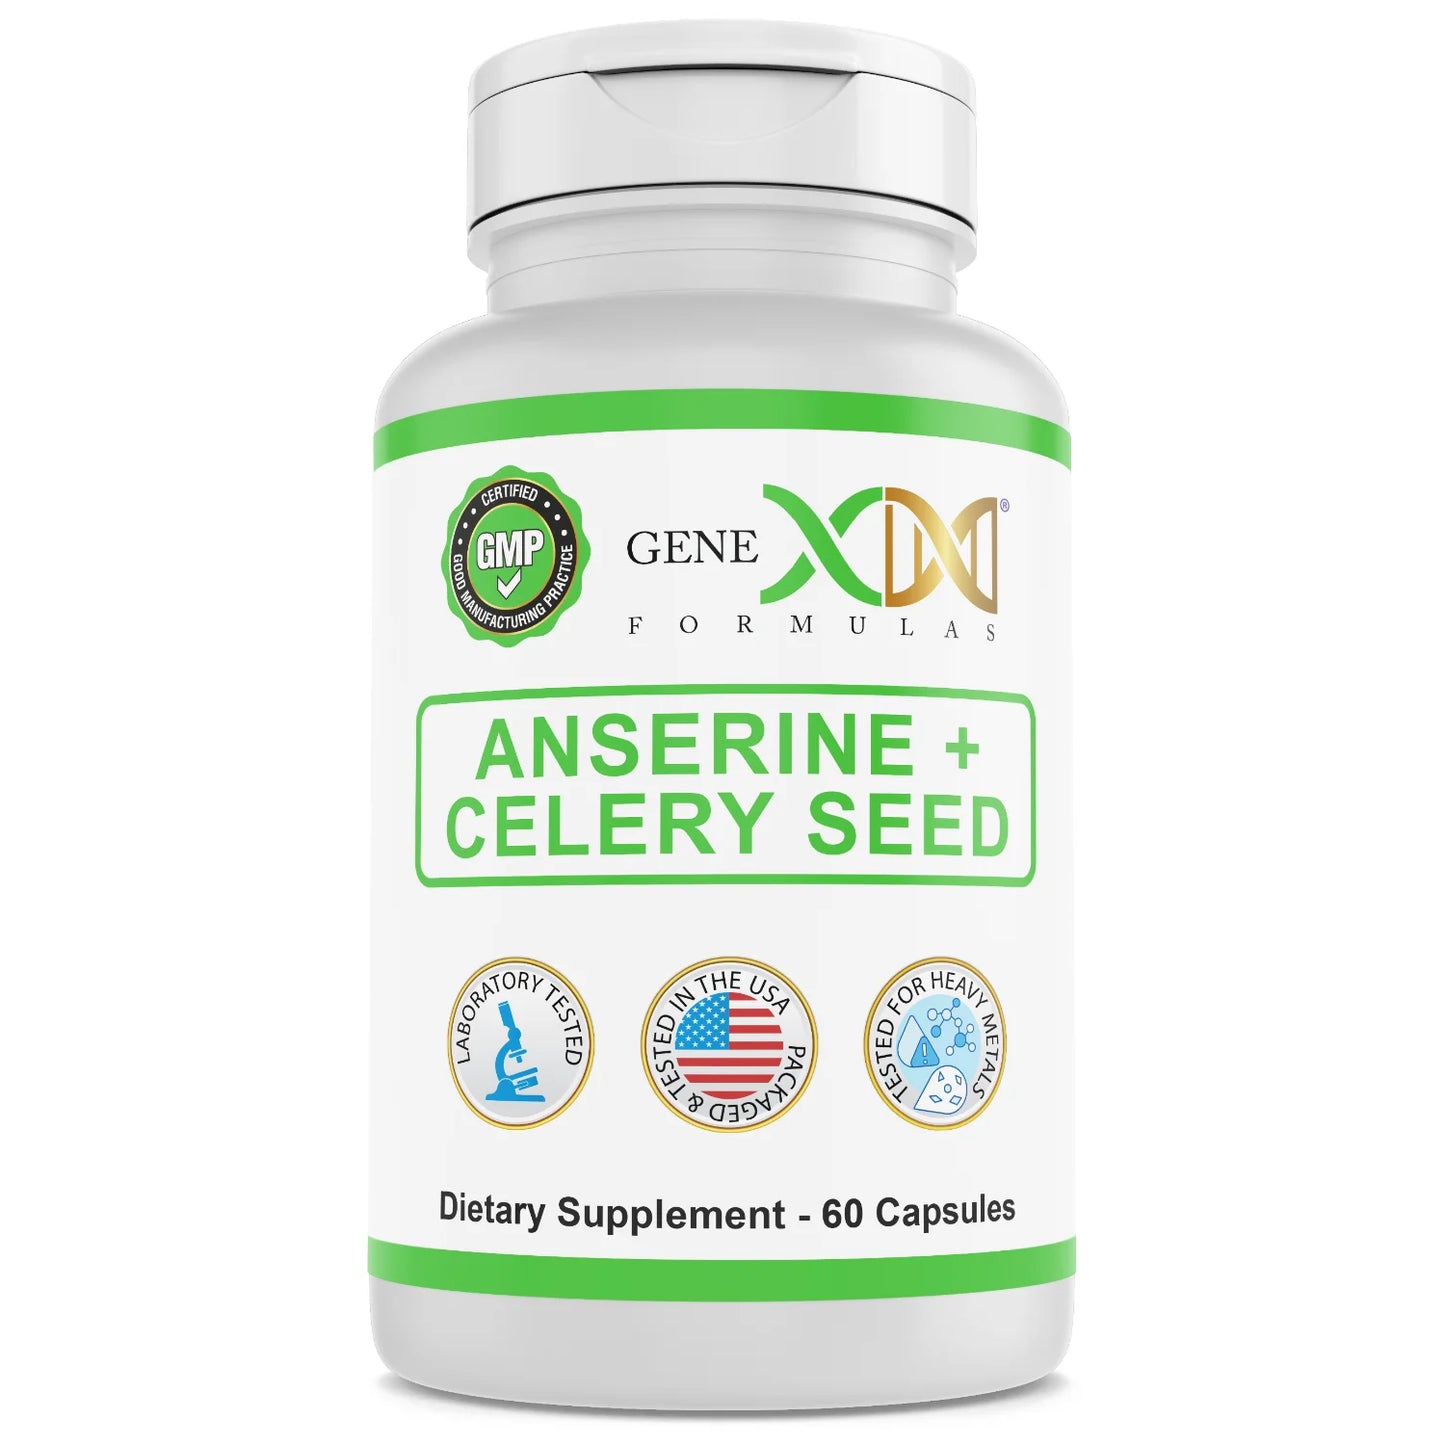 Anserine + Celery Seed